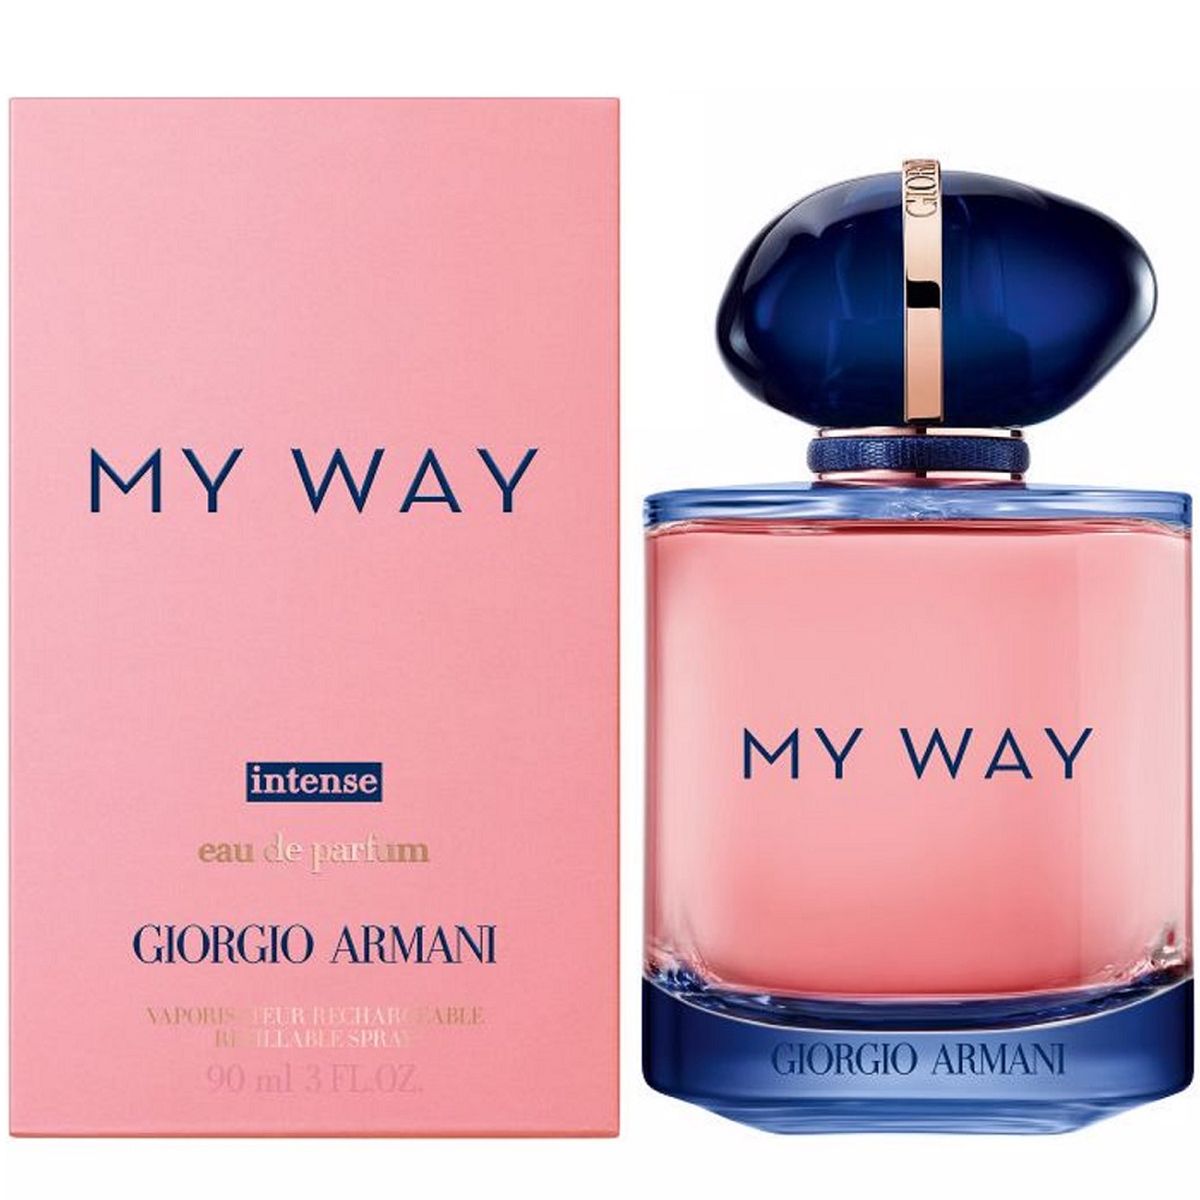 Giorgio Armani - My Way Intense eau de Parfum 90 ml.